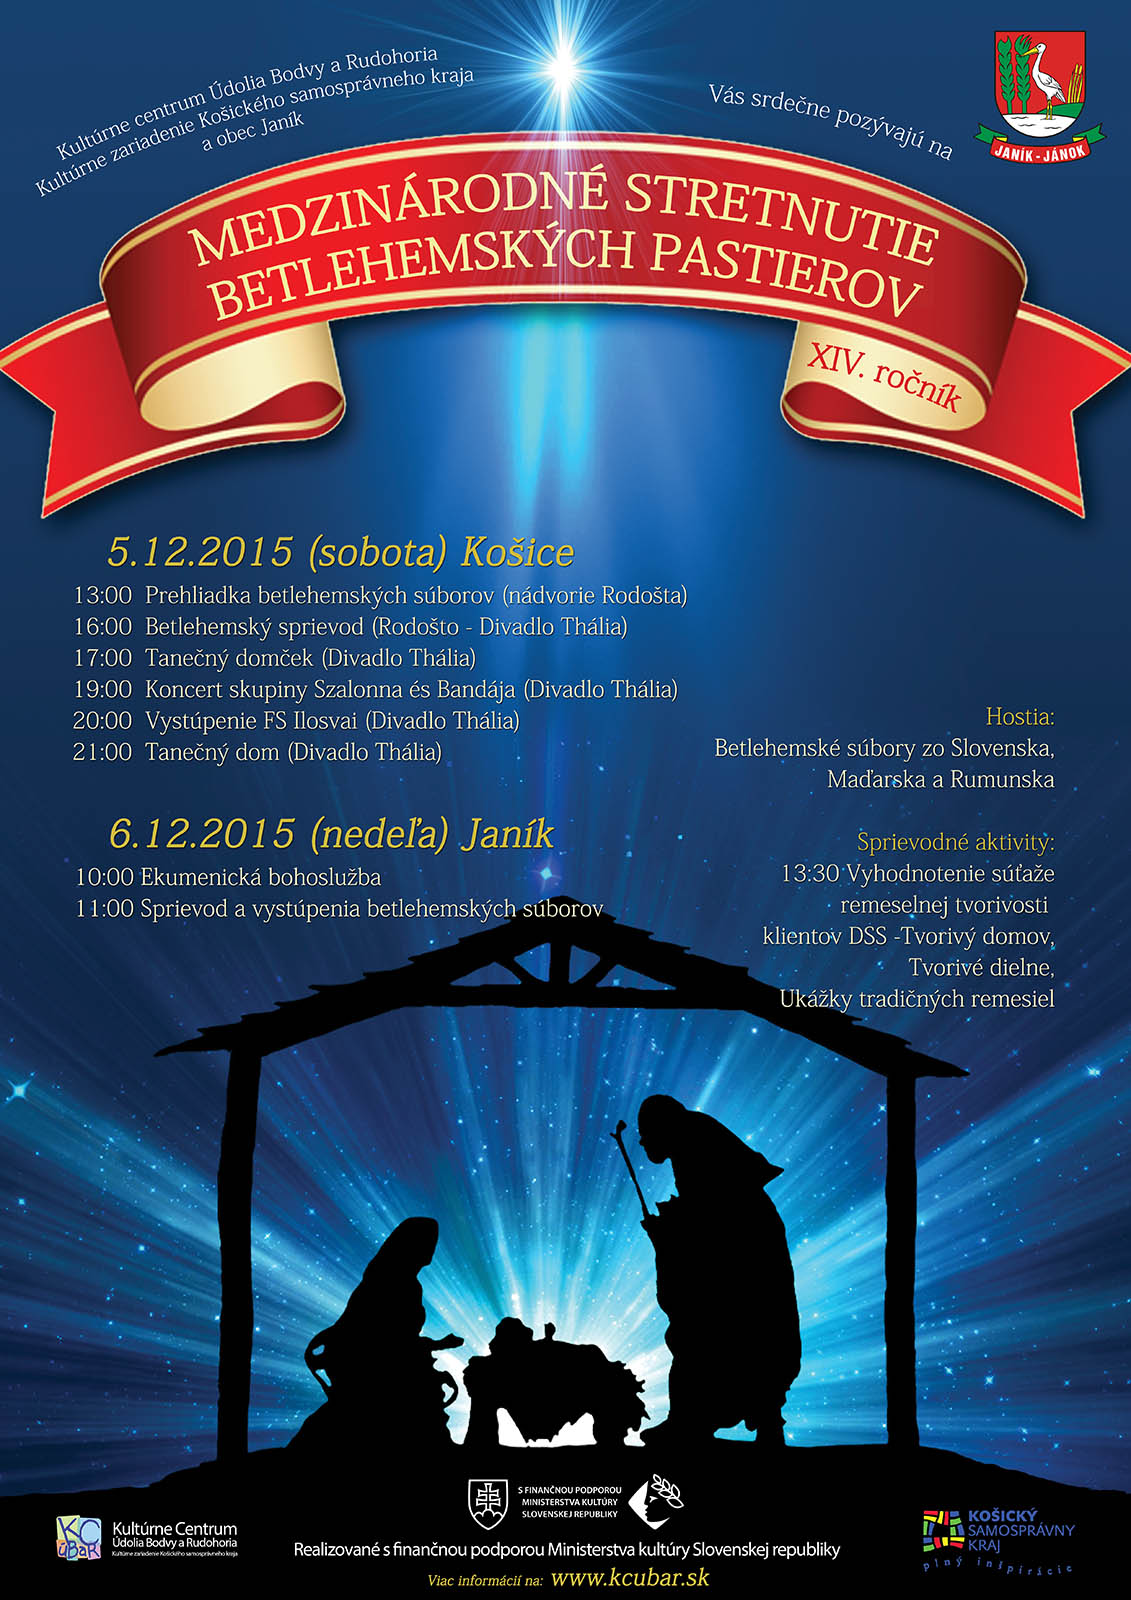 Medzinrodn stretnutie betlehemskch pastierov 2015 - XIV. ronk